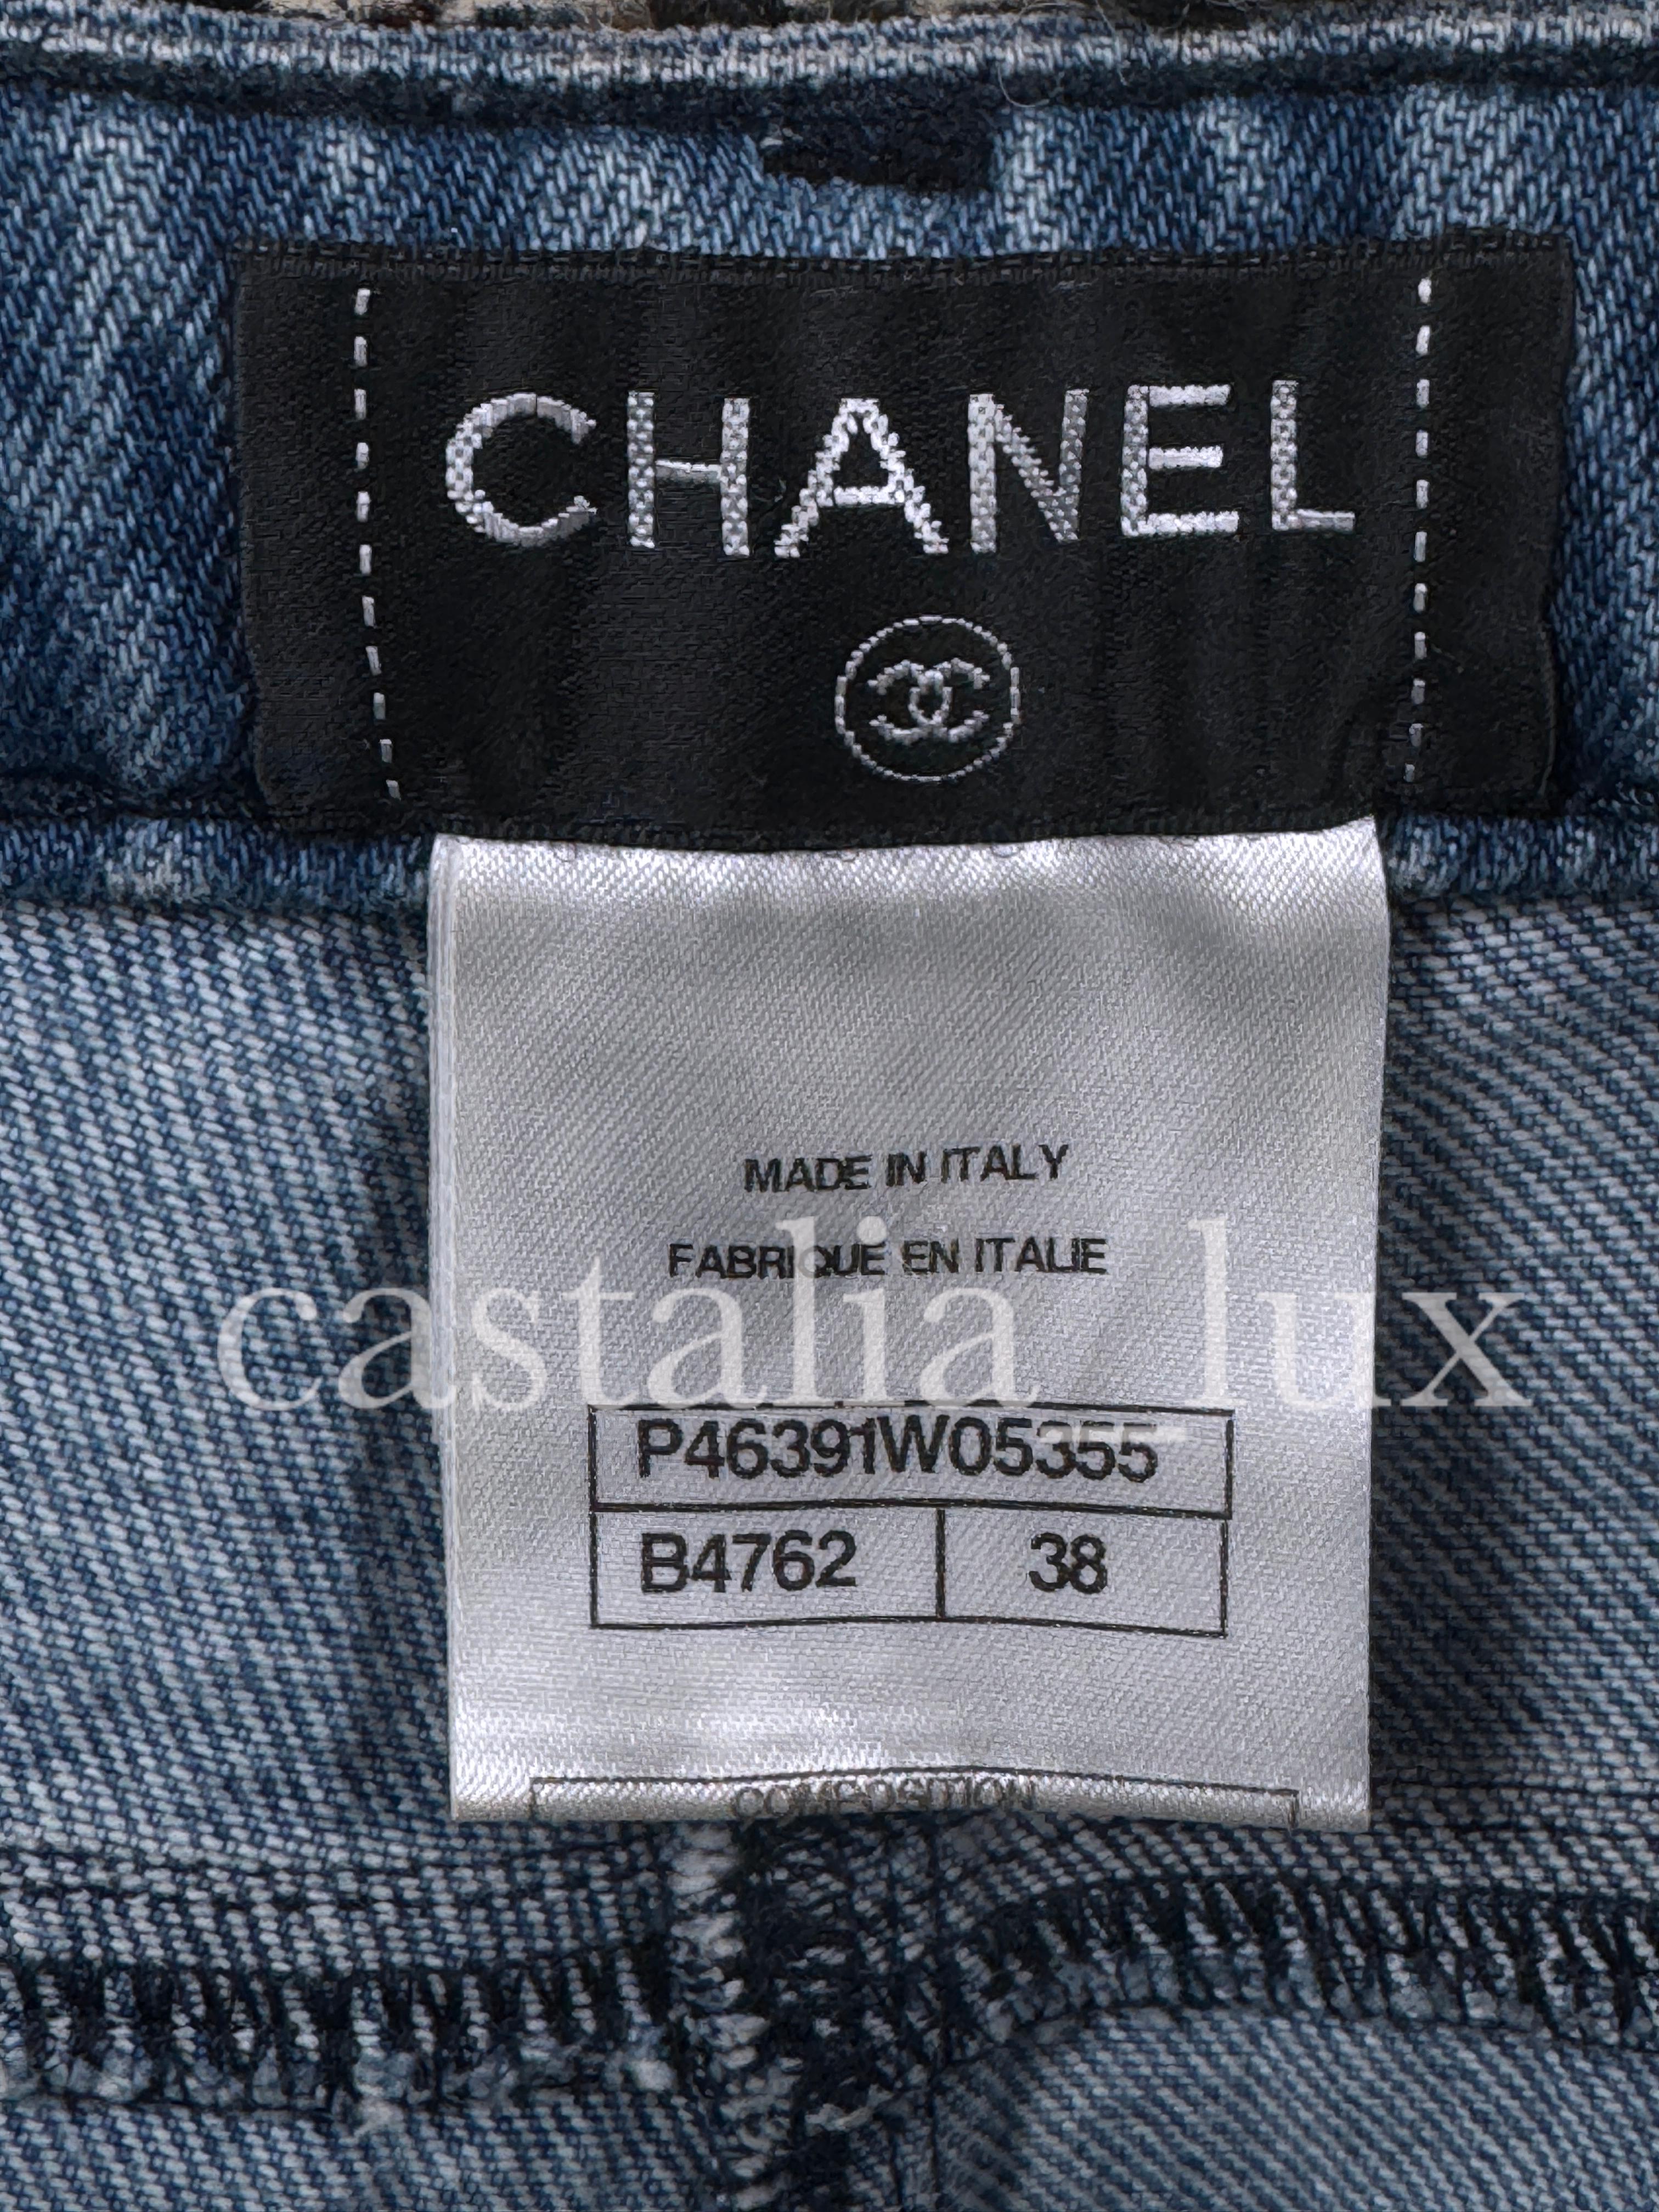 Chanel New Iconic Paris / Edinburgh Runway Tartan Jeans For Sale 11